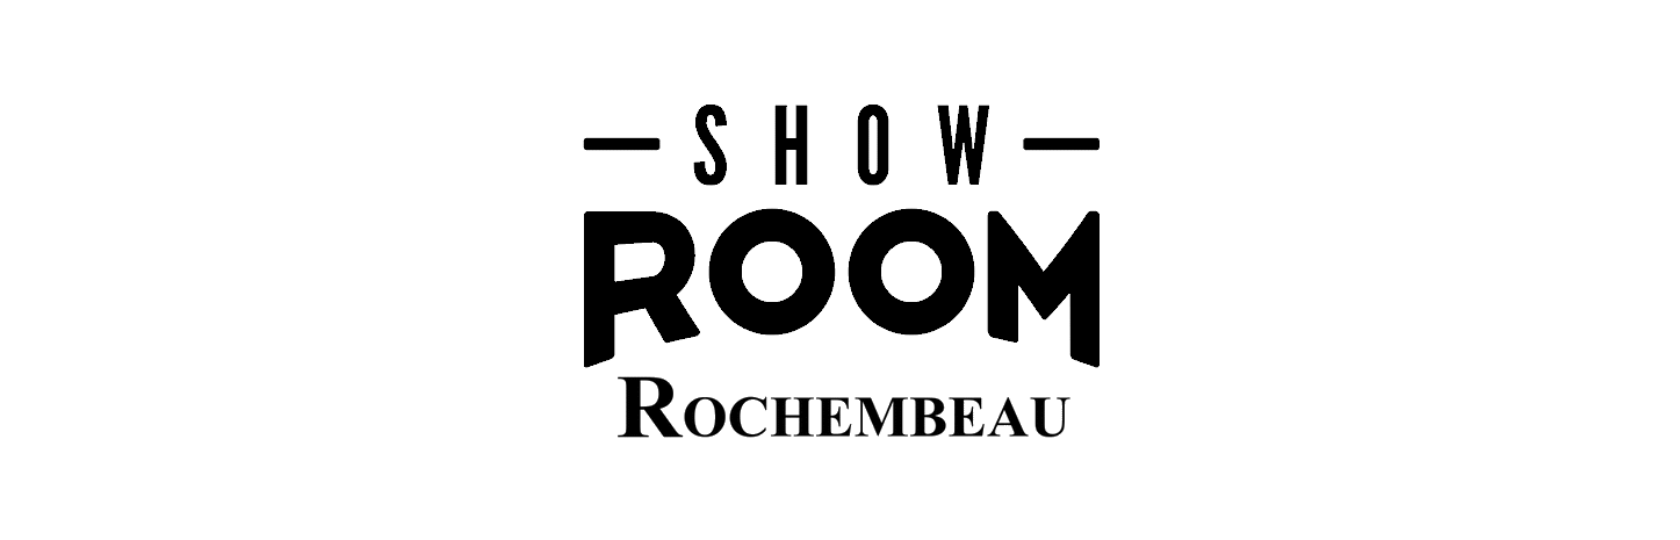 Showroom Rochembeau